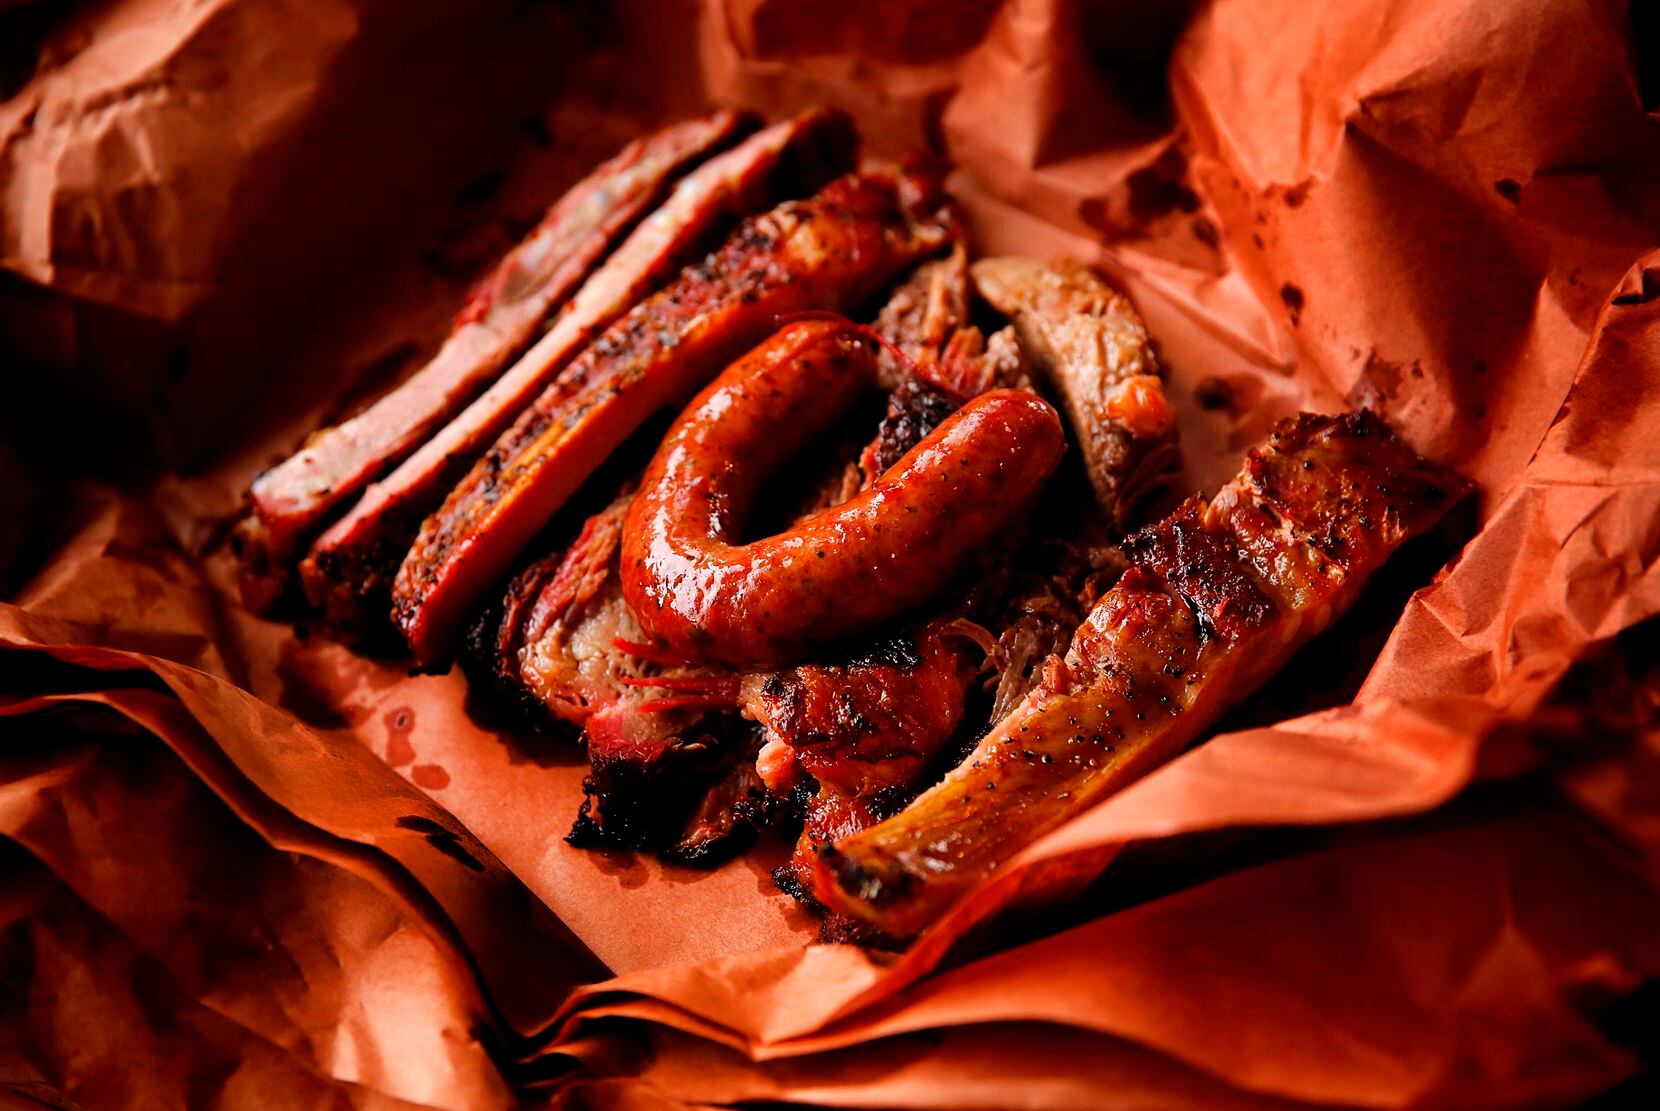 A sampling of ribs, sausage and brisket at Kreuz Market in Lockhart